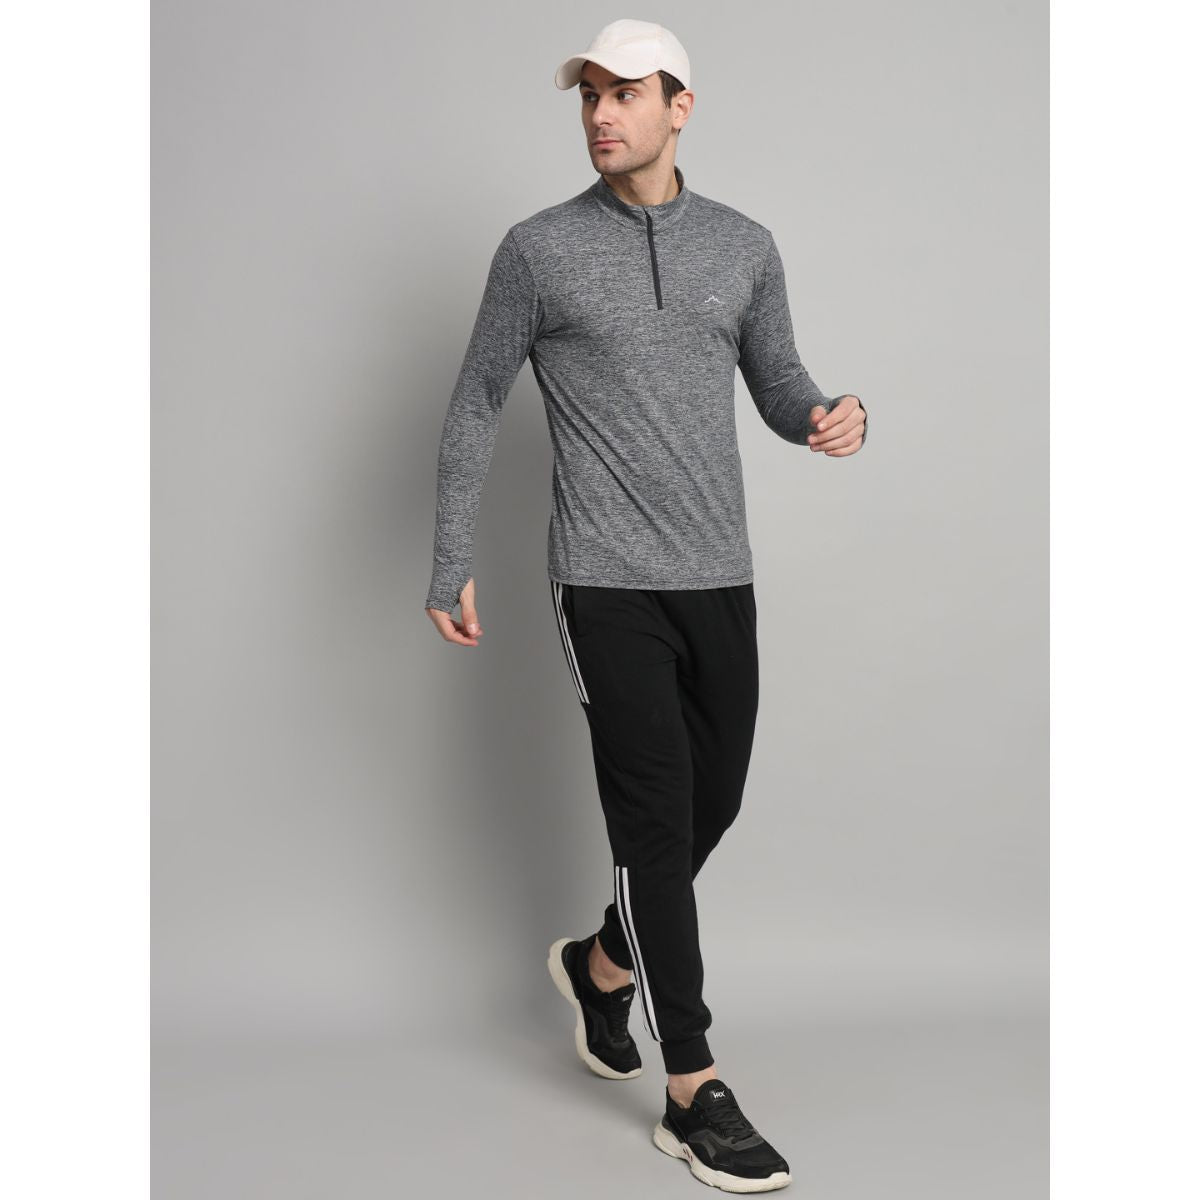 Men's Nomadic Full Sleeves T-Shirt / Baselayer - Charcoal Gray 2